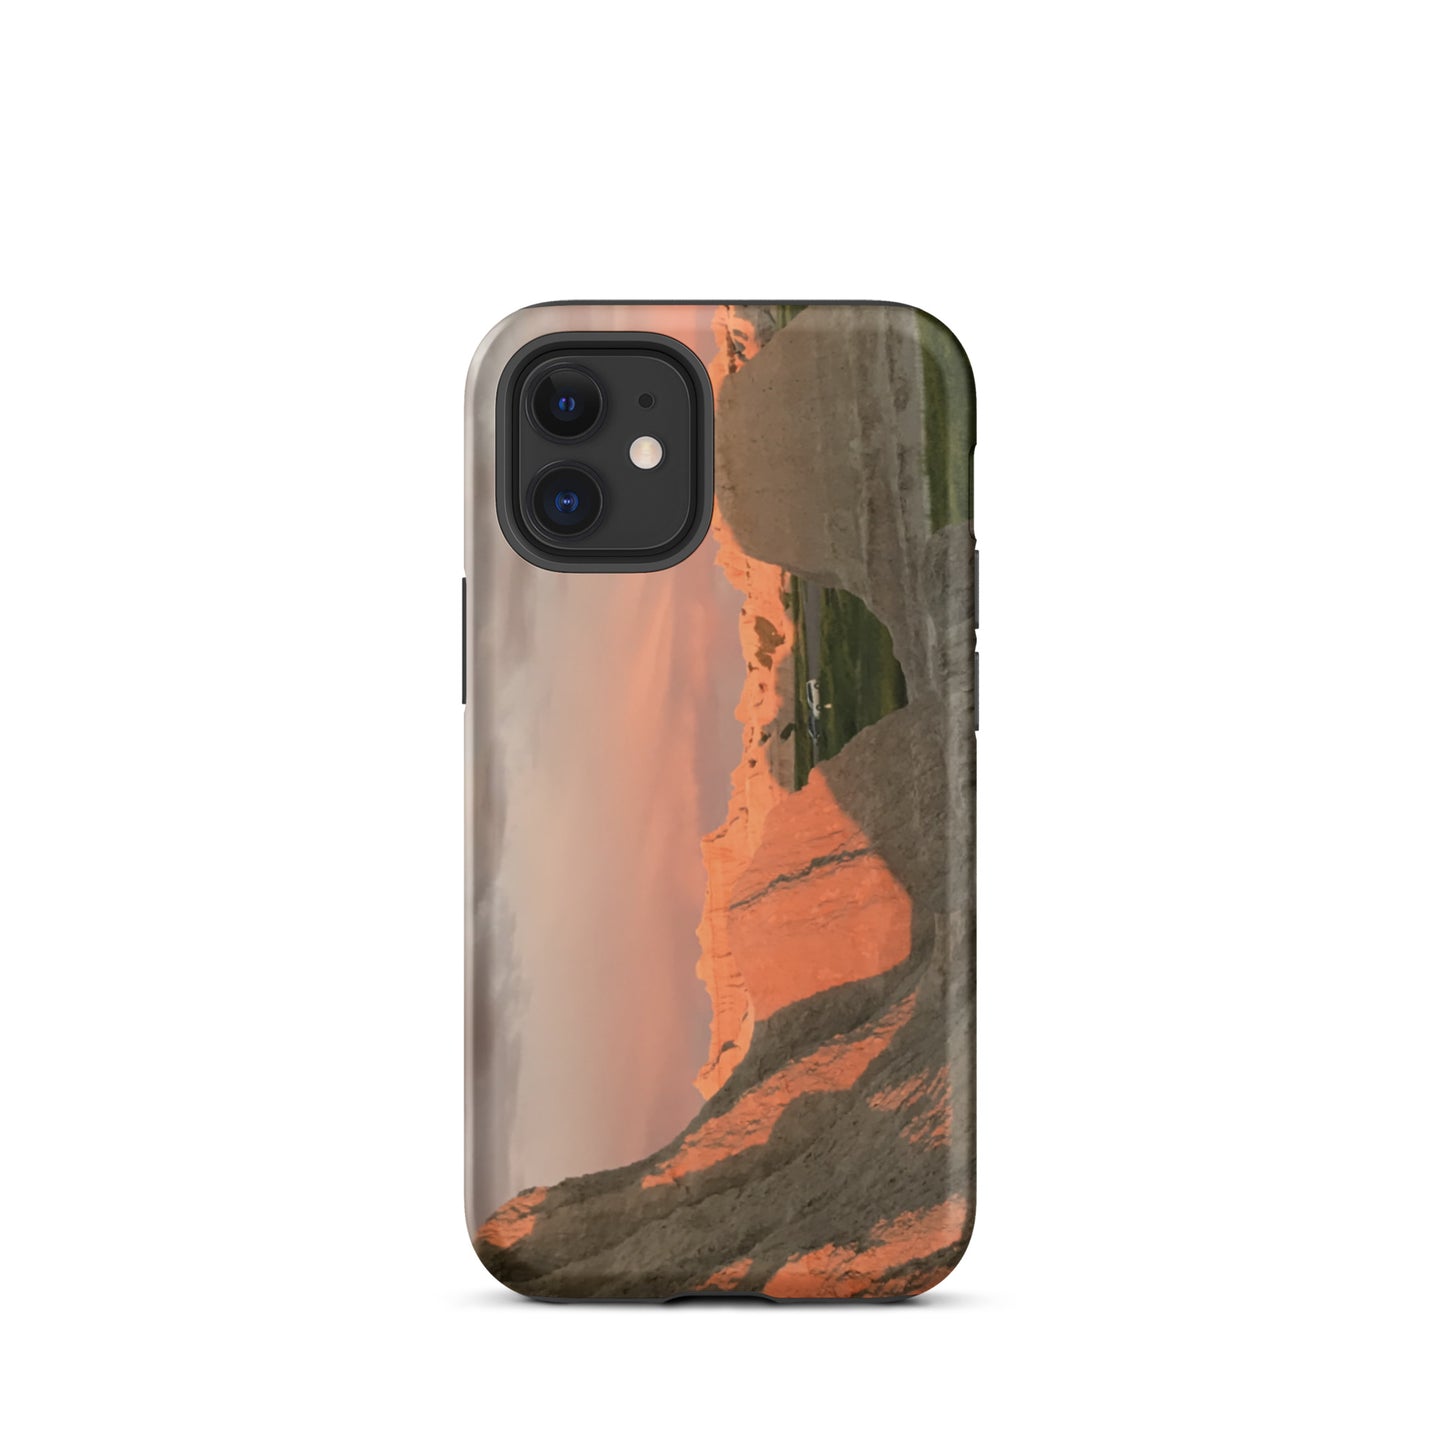 Badlands Tough iPhone case